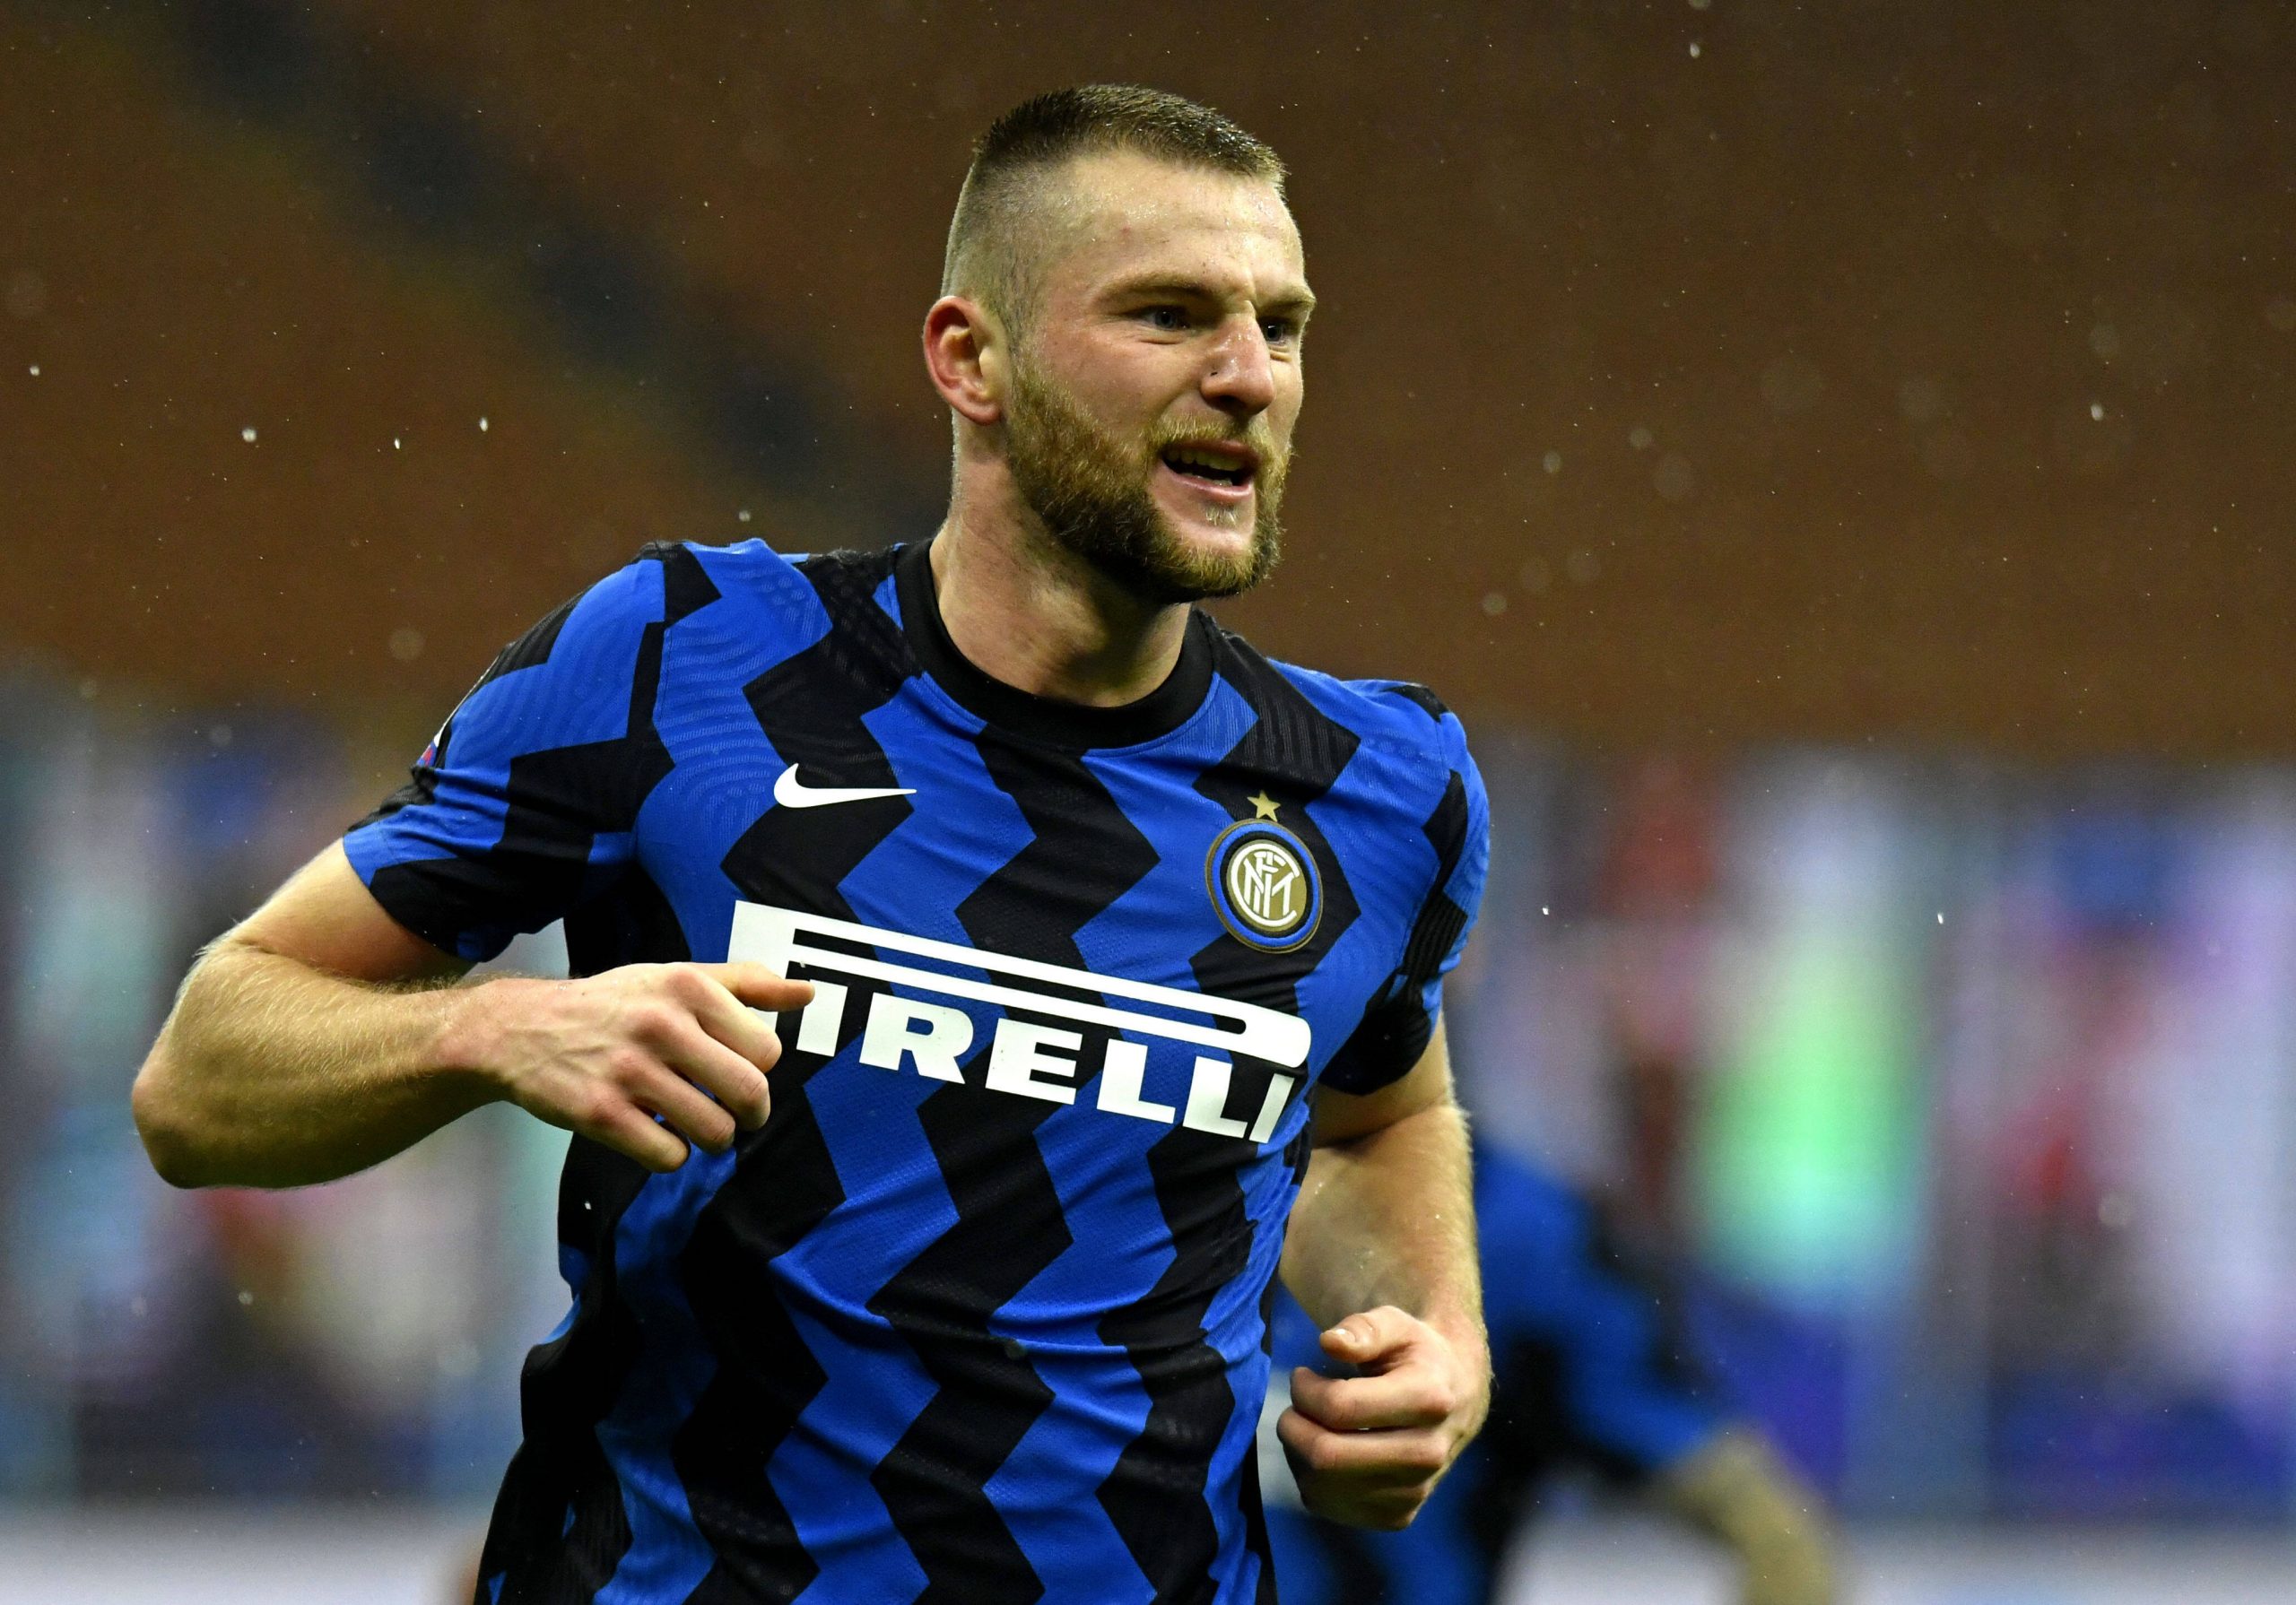 Inter’s €60M Price Tag On Milan Skriniar Insurmountable For Liverpool, Italian Media Claims